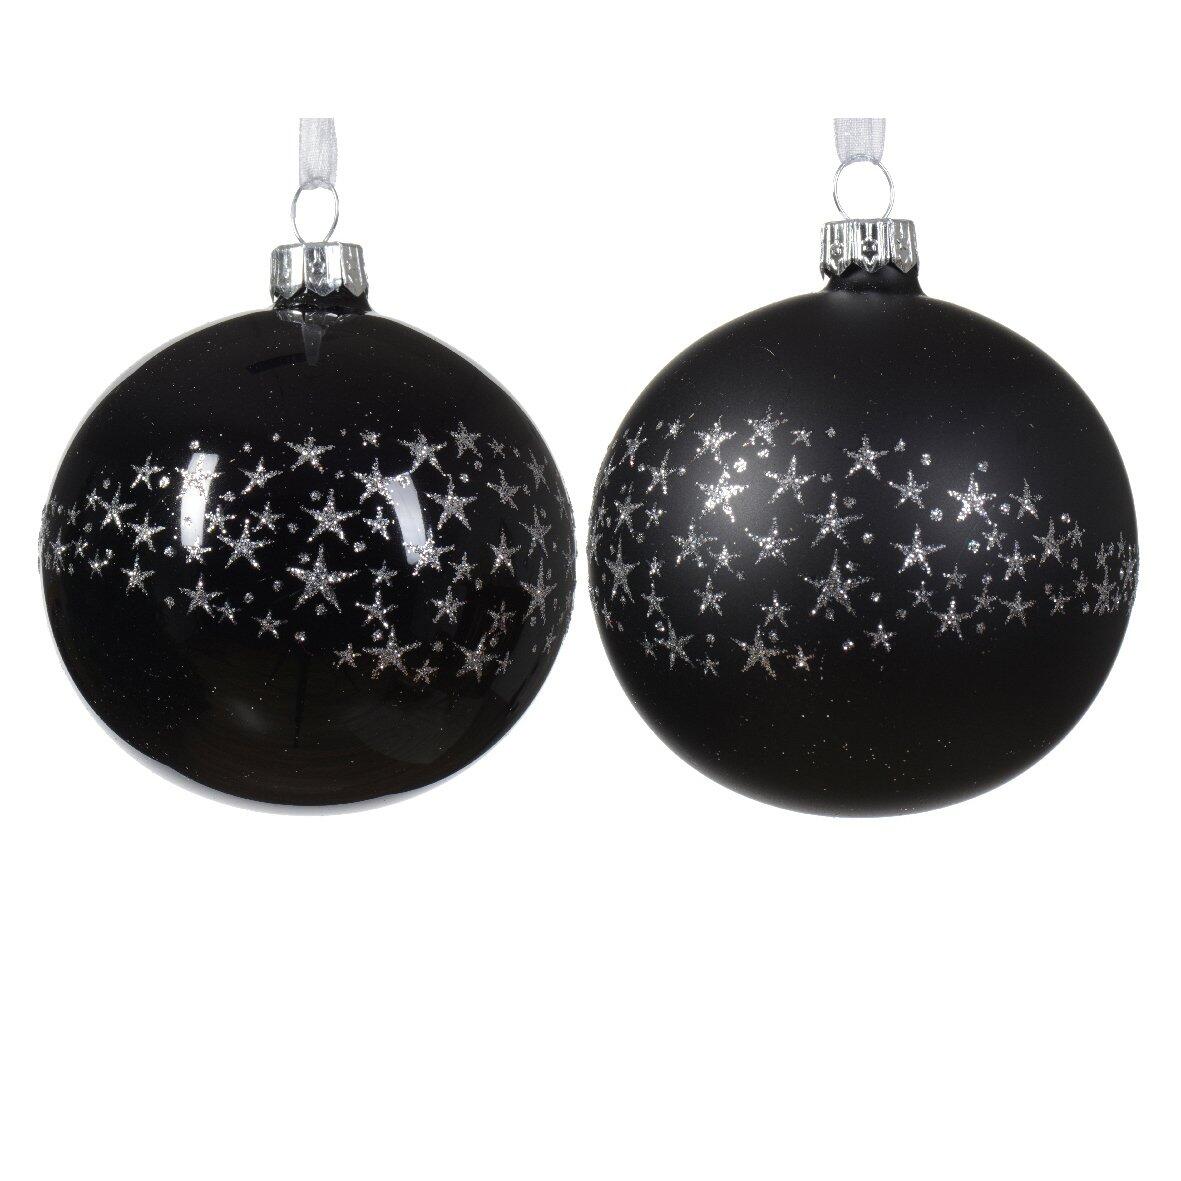 Lote de 6 bolas de Navidad (D80 mm) en vidrio Couronne d'étoiles Negro 1